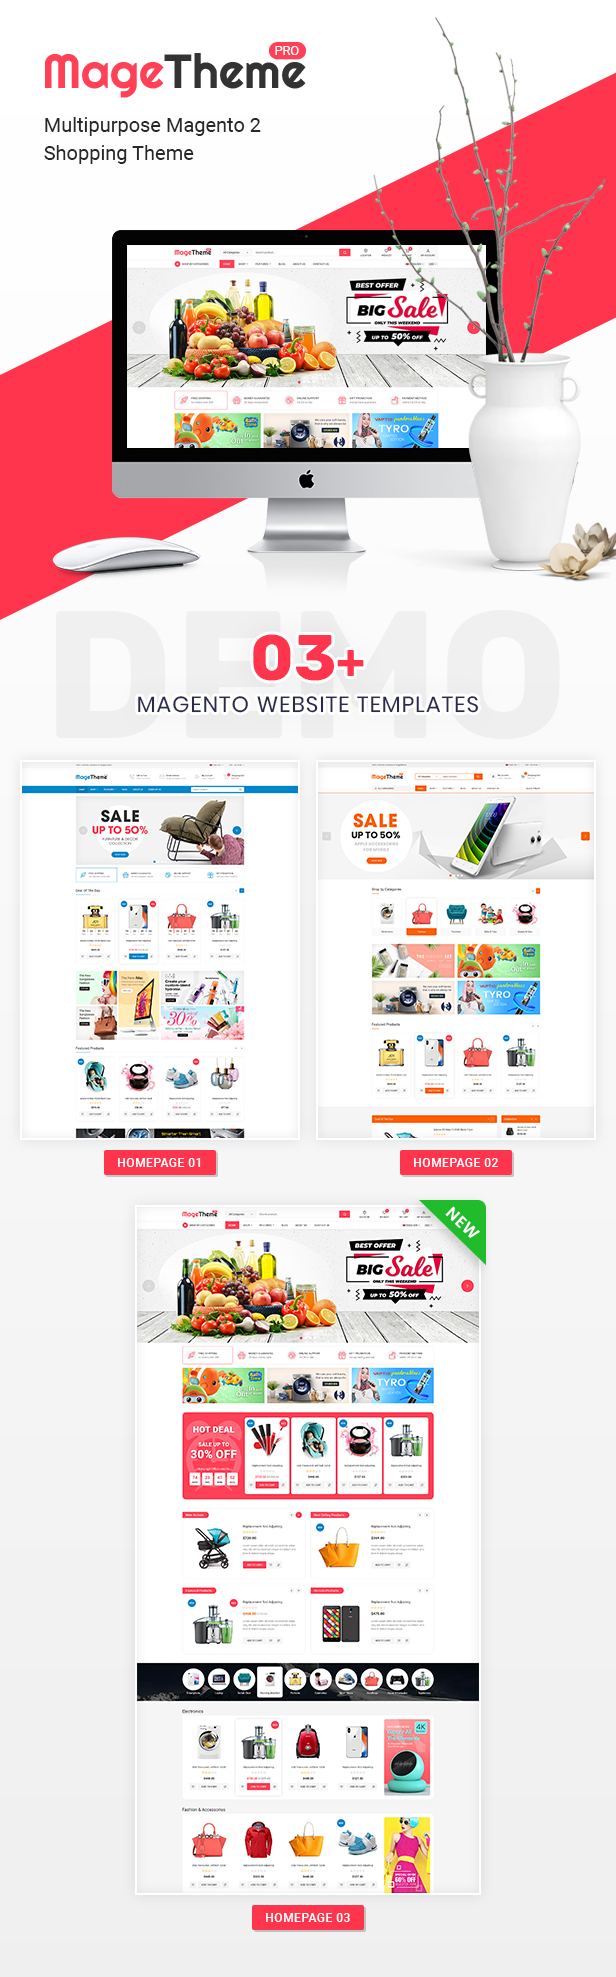 MageThemepro - Responsive Magento 2 Shopping Template - 7